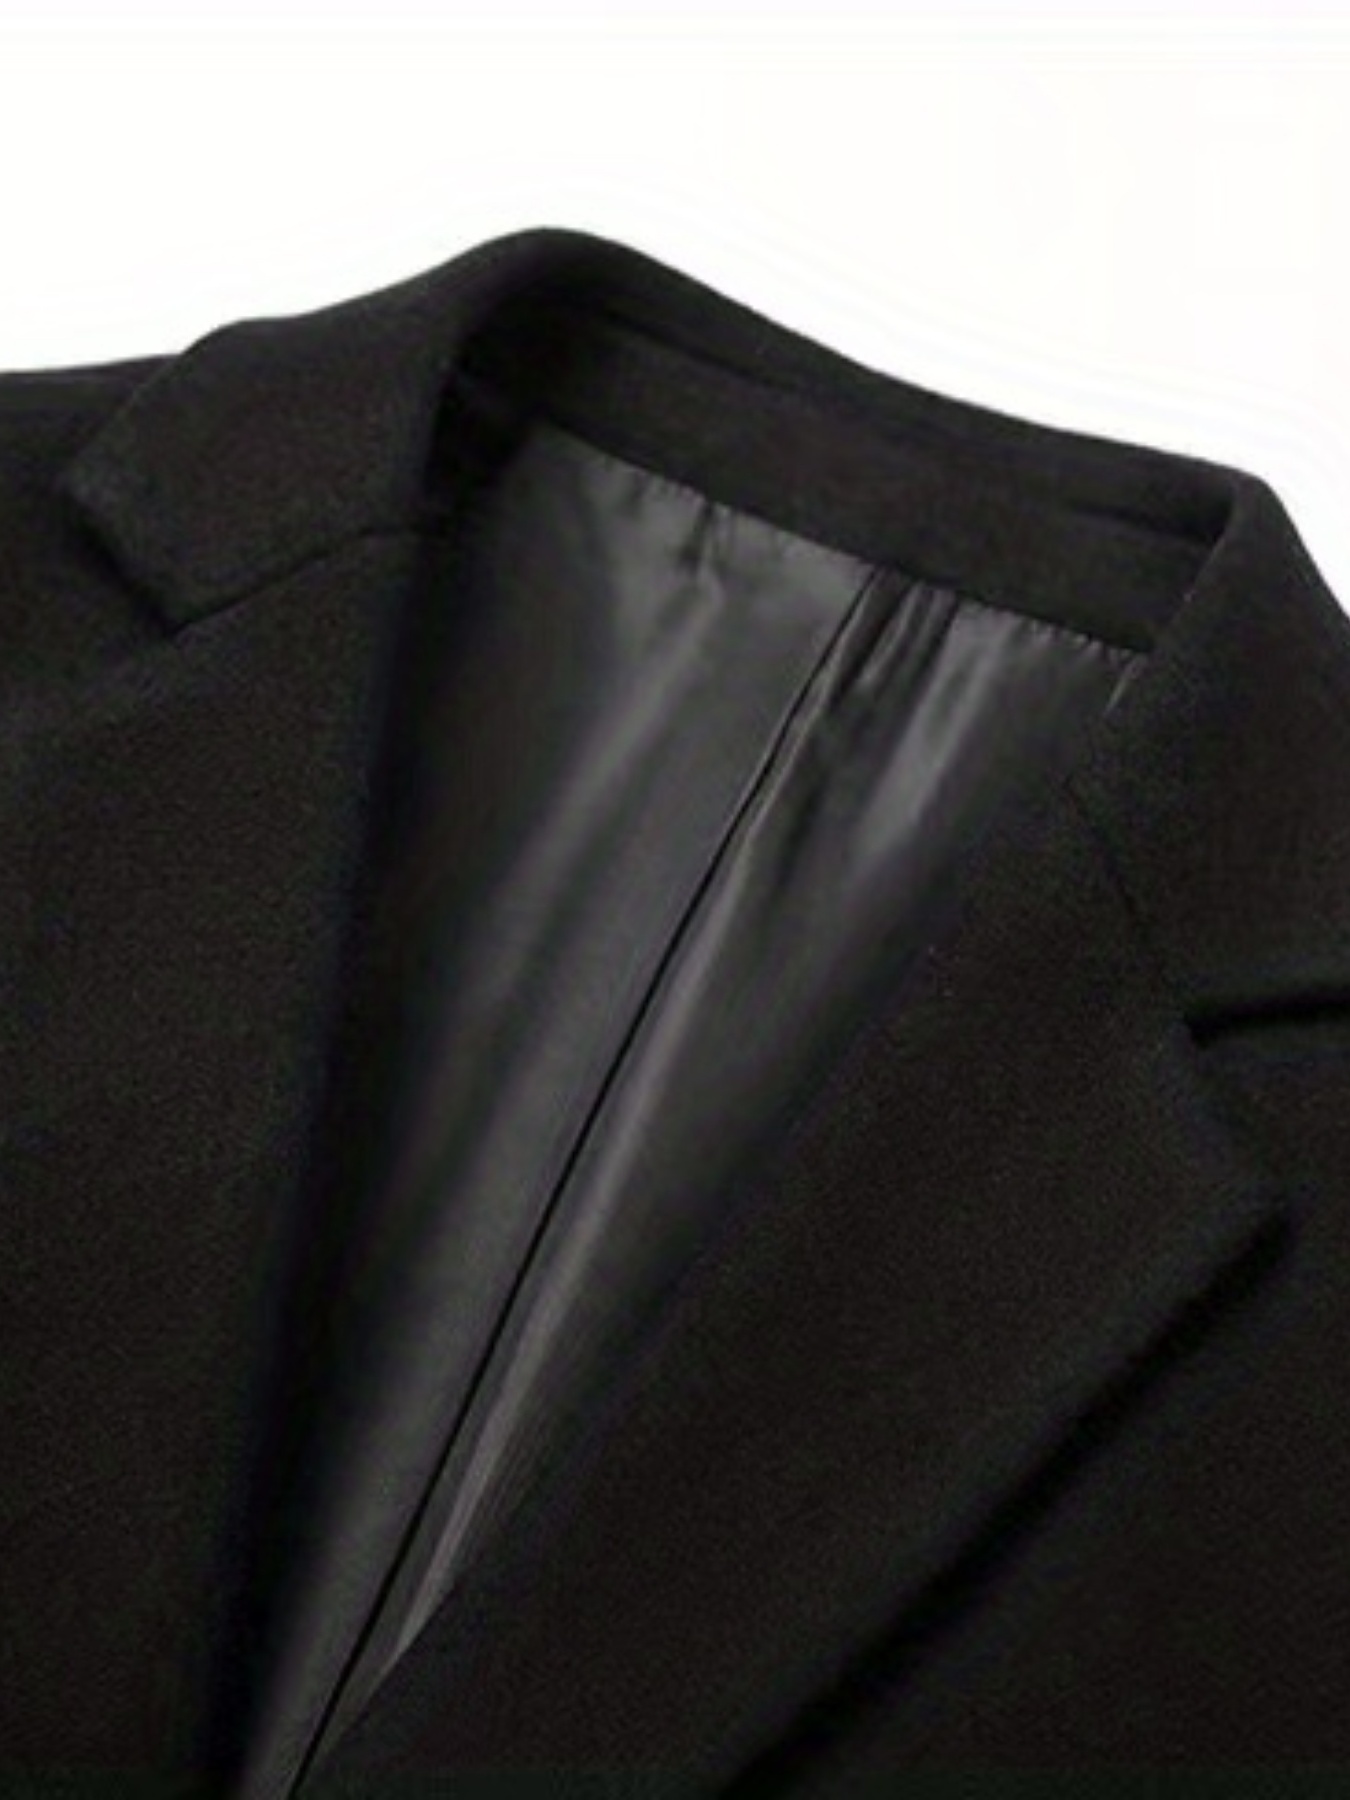 Plain Regular Fit Mens Formal Woolen Blazer, Size: S-XXL